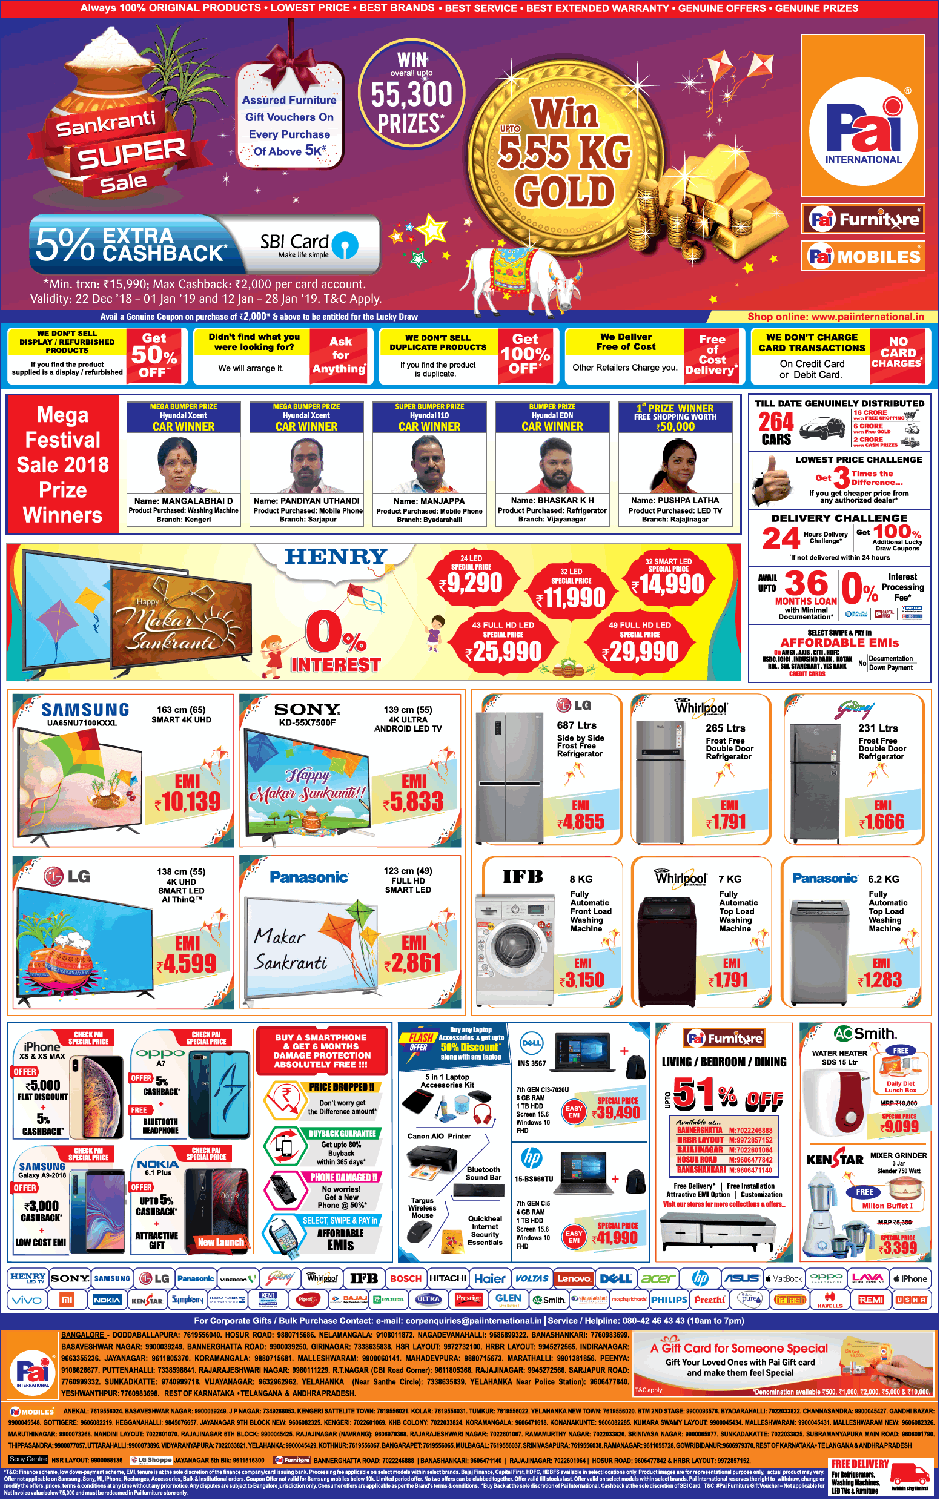 pai-electronics-sankranti-super-sale-ad-bangalore-times-12-01-2019.png